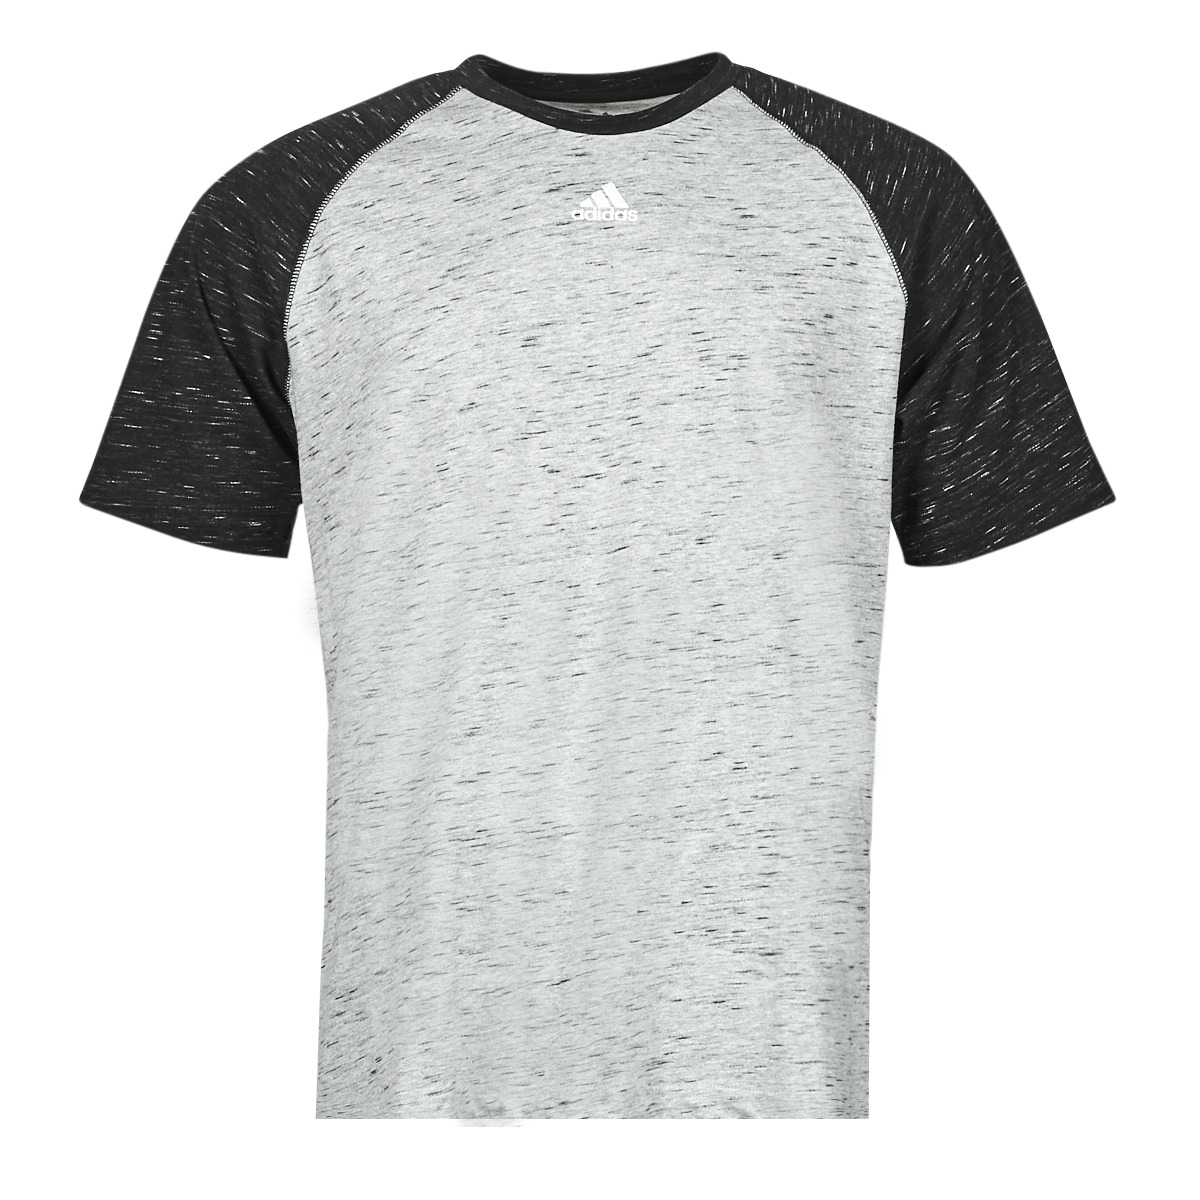 Abbigliamento Uomo T-shirt maniche corte adidas Performance MEL T-SHIRT Medium / Grigio / Heather / Black / Melange